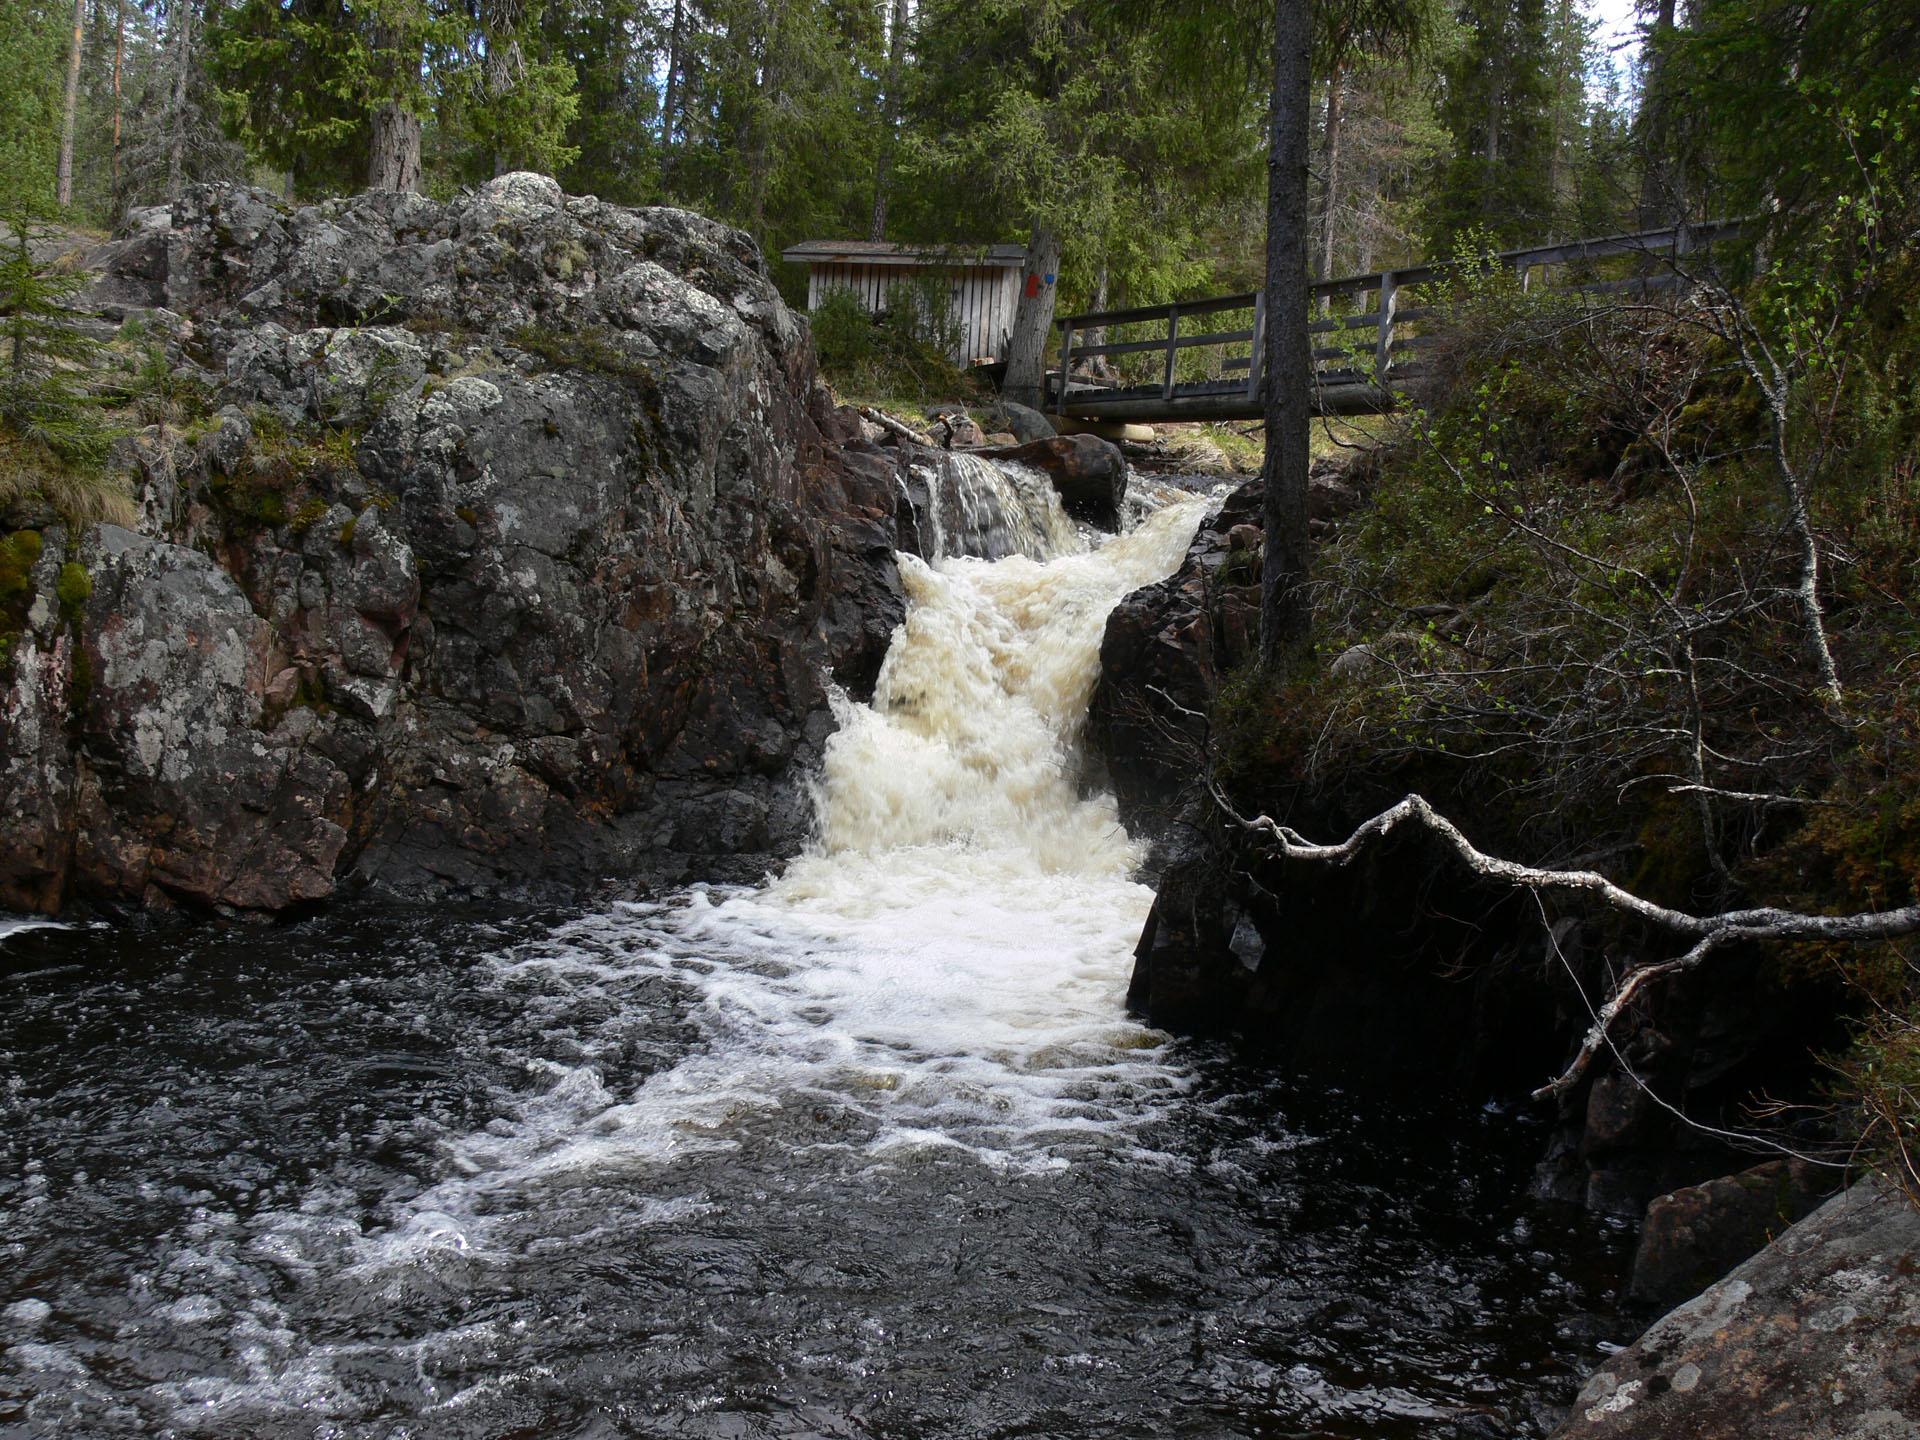 Cover image of this place Salmijoen kuru